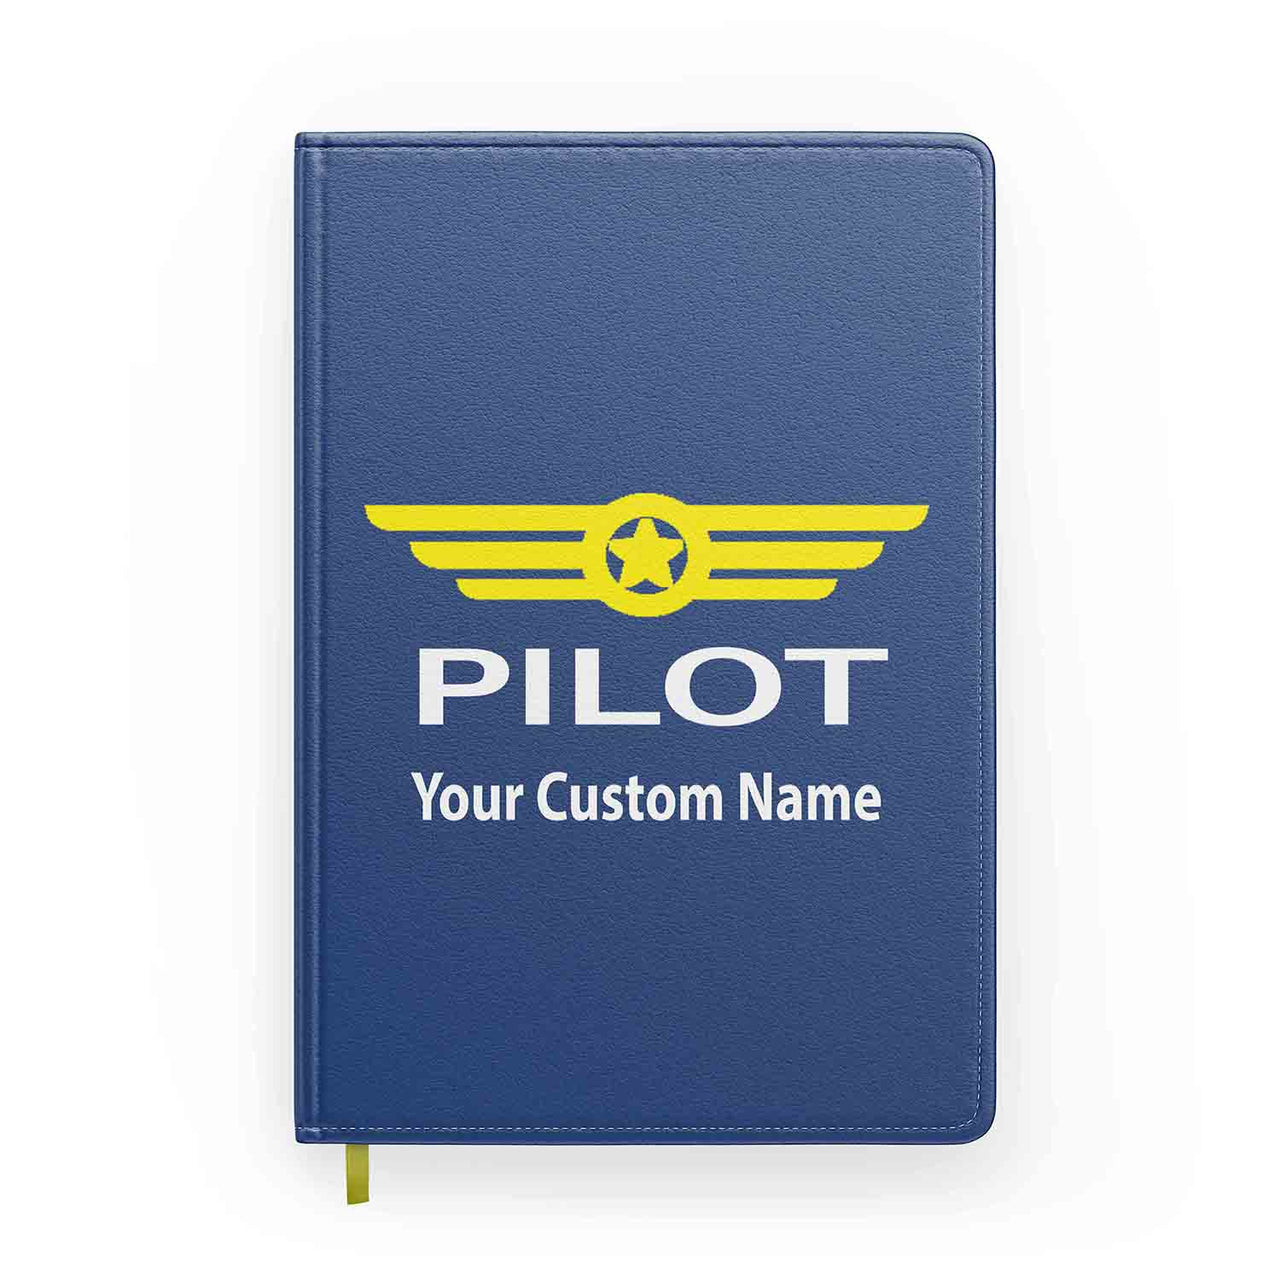 Customizable Name & PILOT BADGE Designed Notebooks